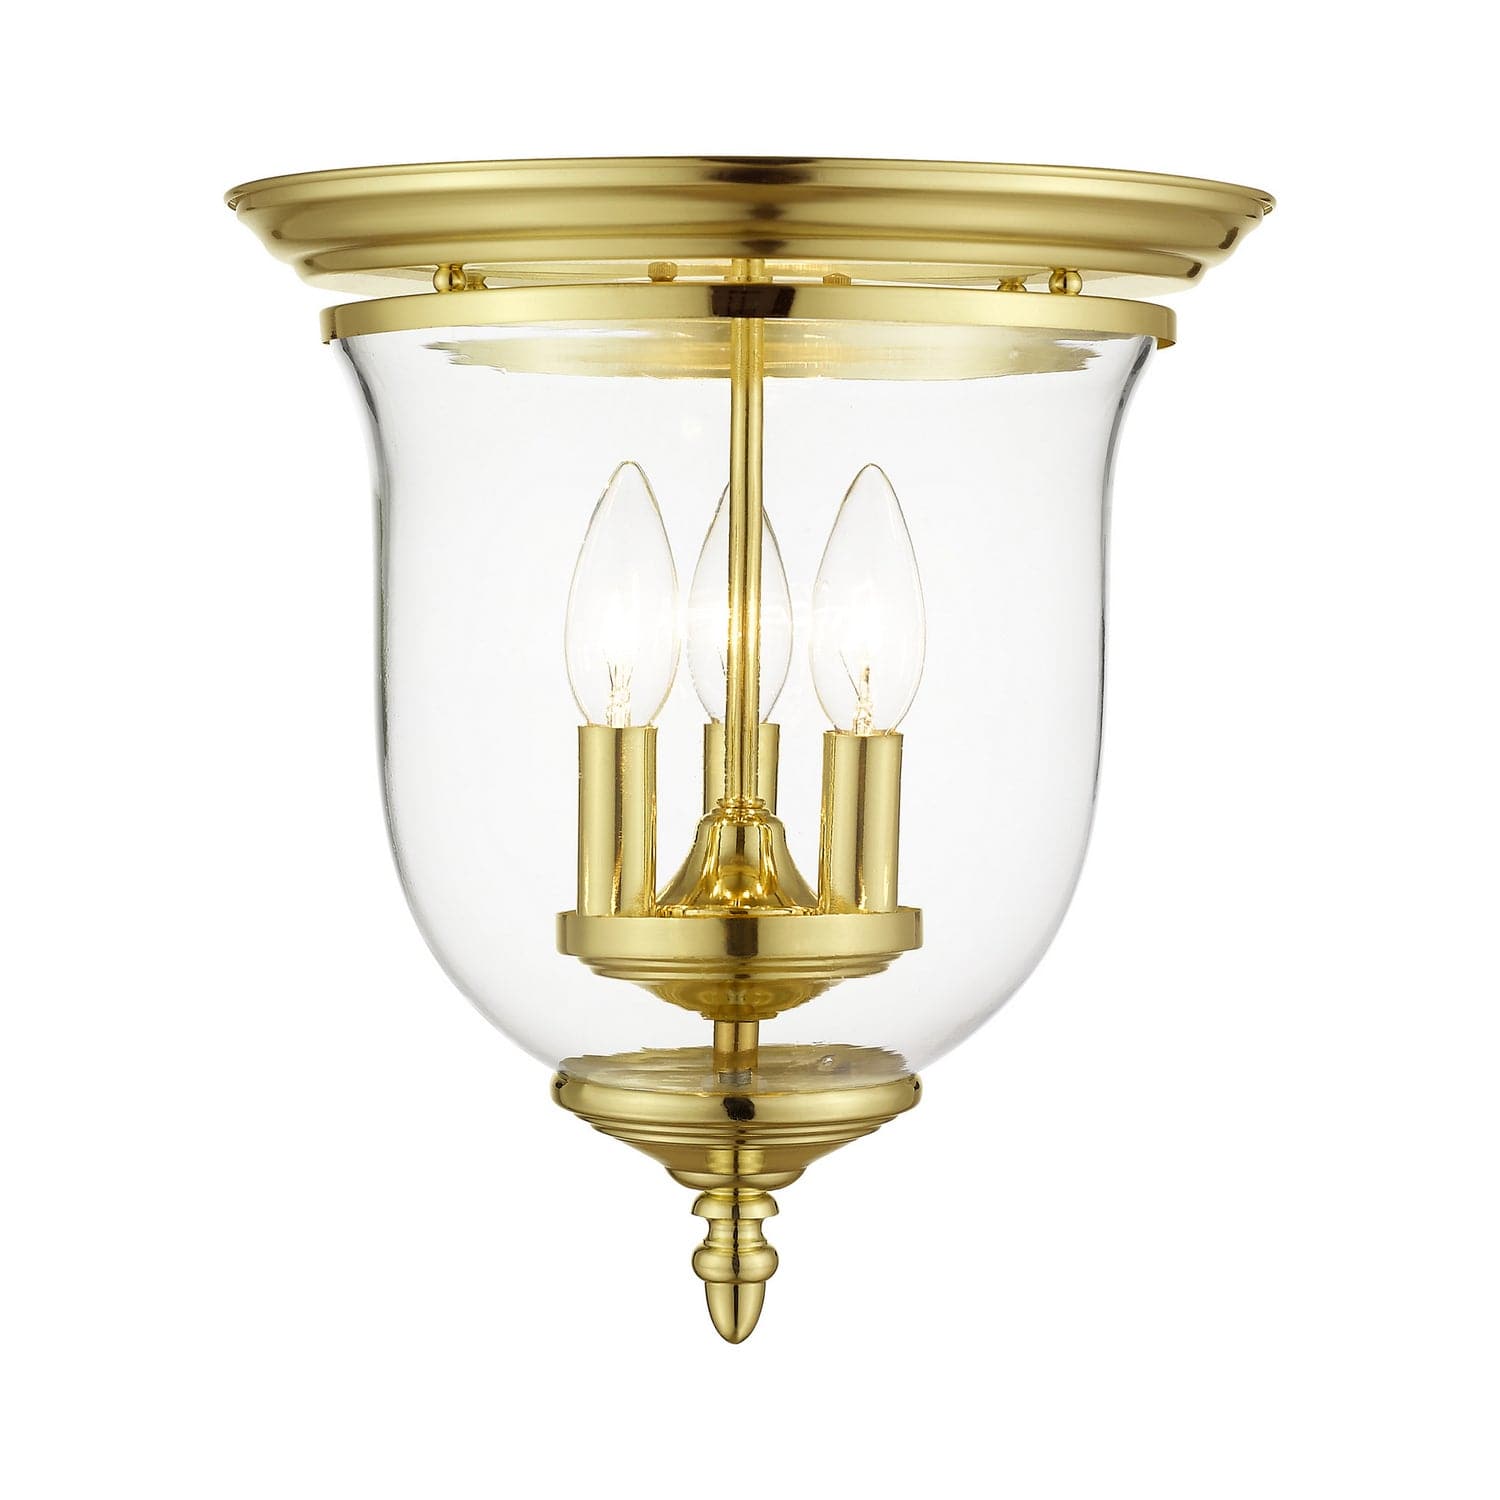 Livex Lighting - 5021-02 - Three Light Ceiling Mount - Legacy - Polished Brass